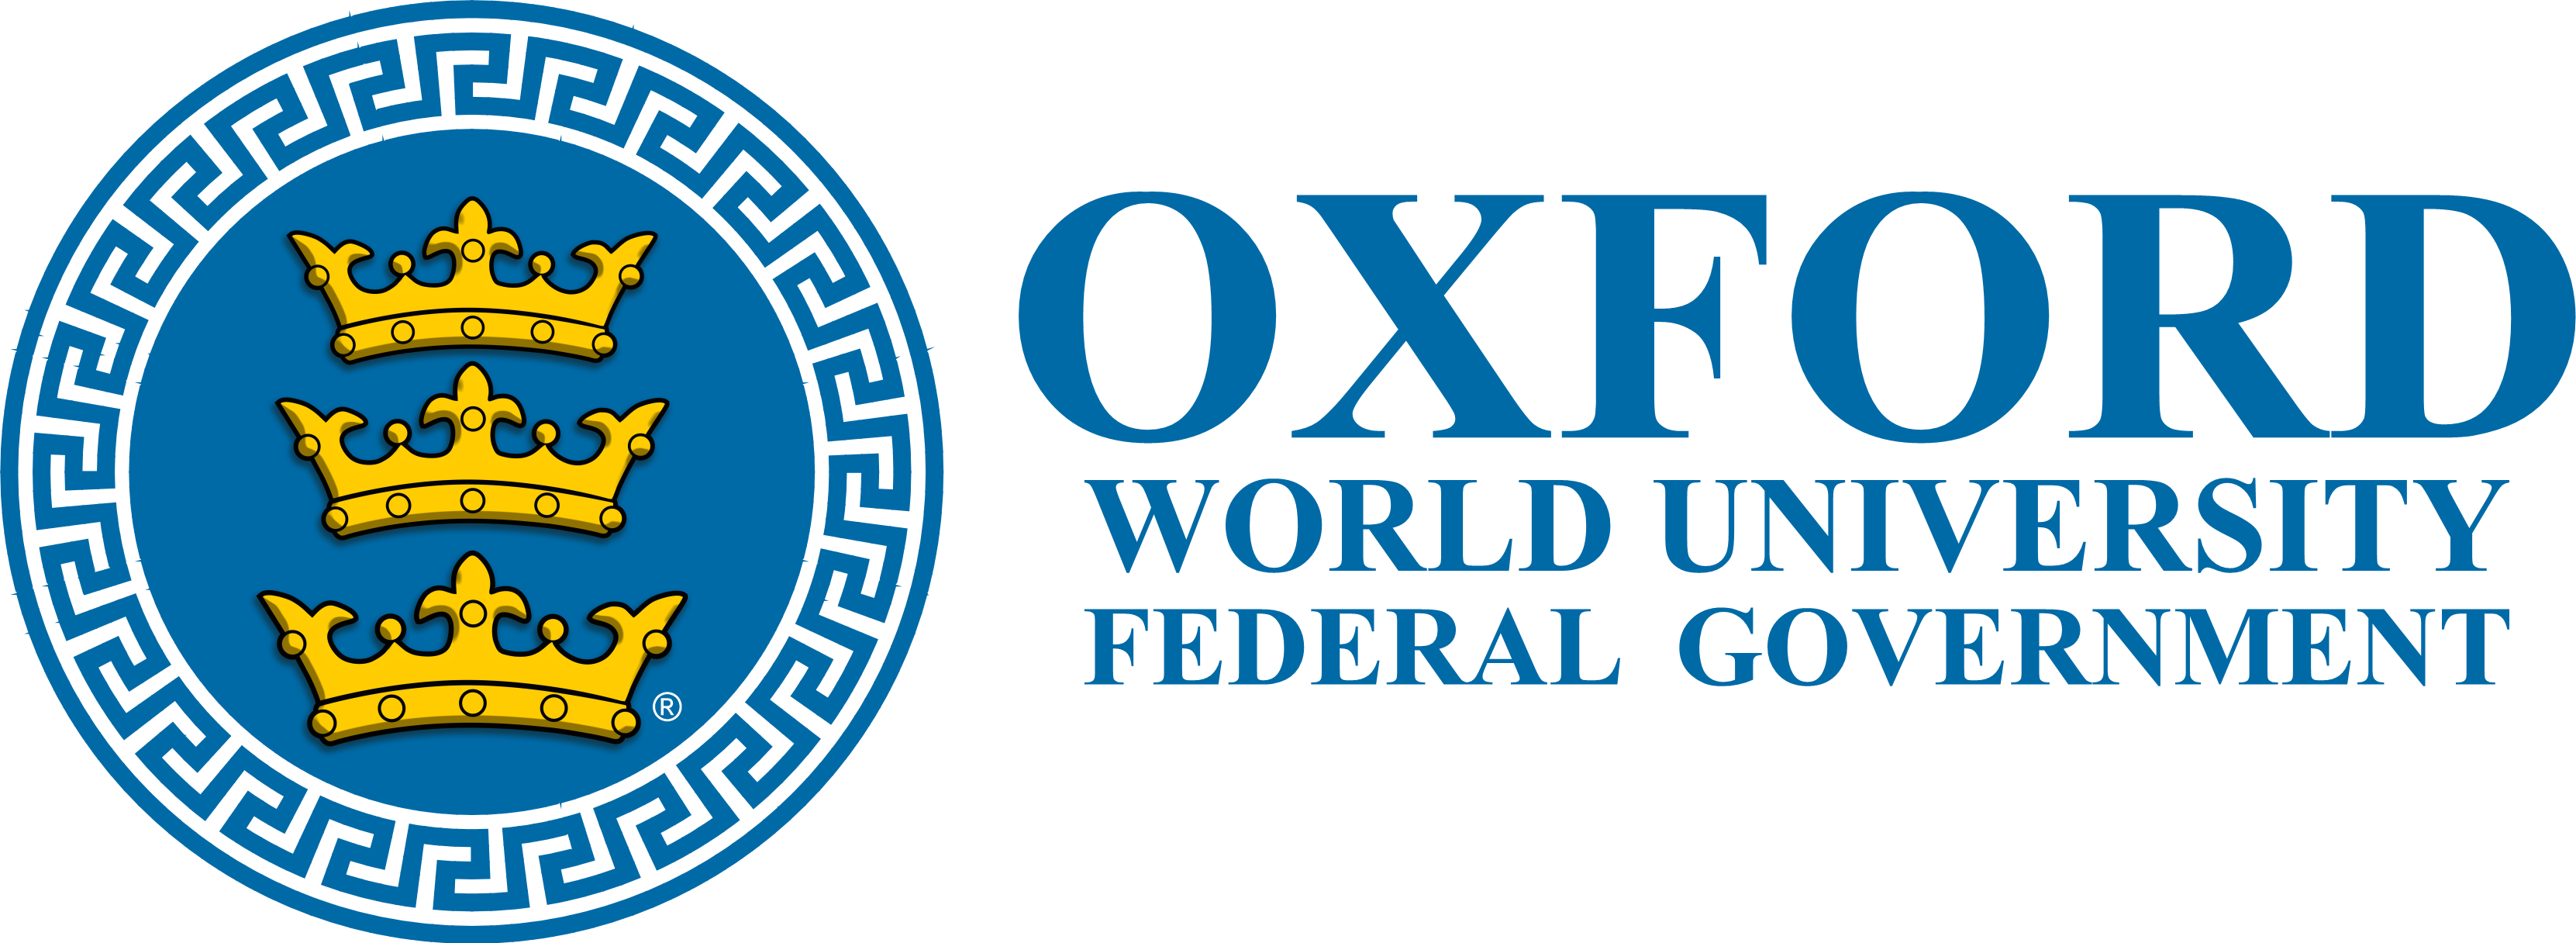 OXFORD WORLD UNIVERSITY